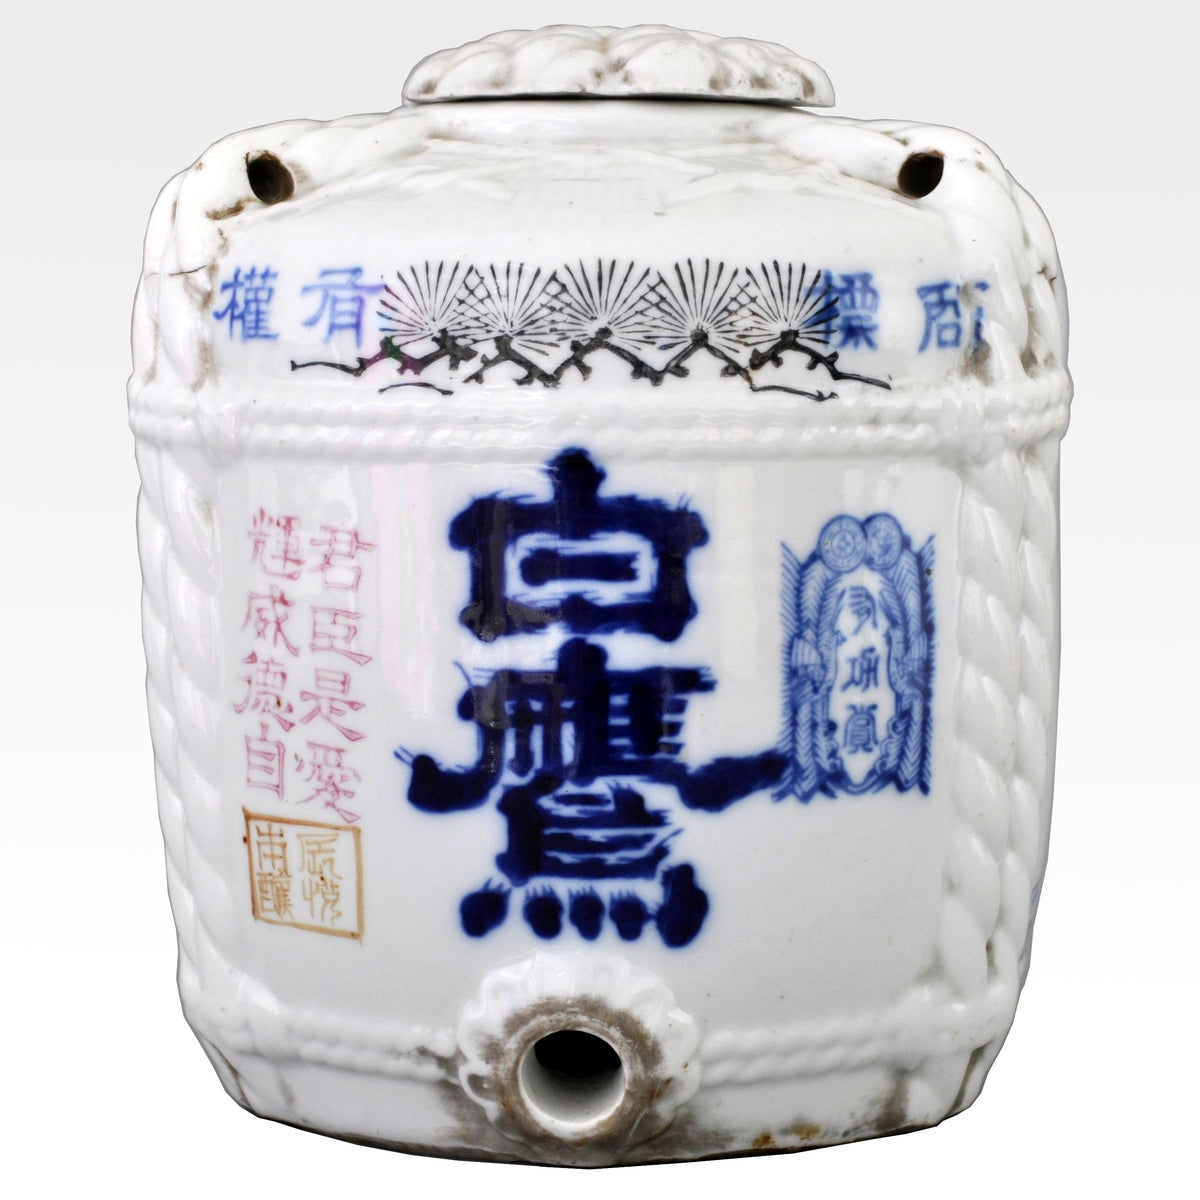 Antique 19th Century Japanese Pottery Lidded Sake / Wine Serving Vessel, Meiji Period, Circa 1880